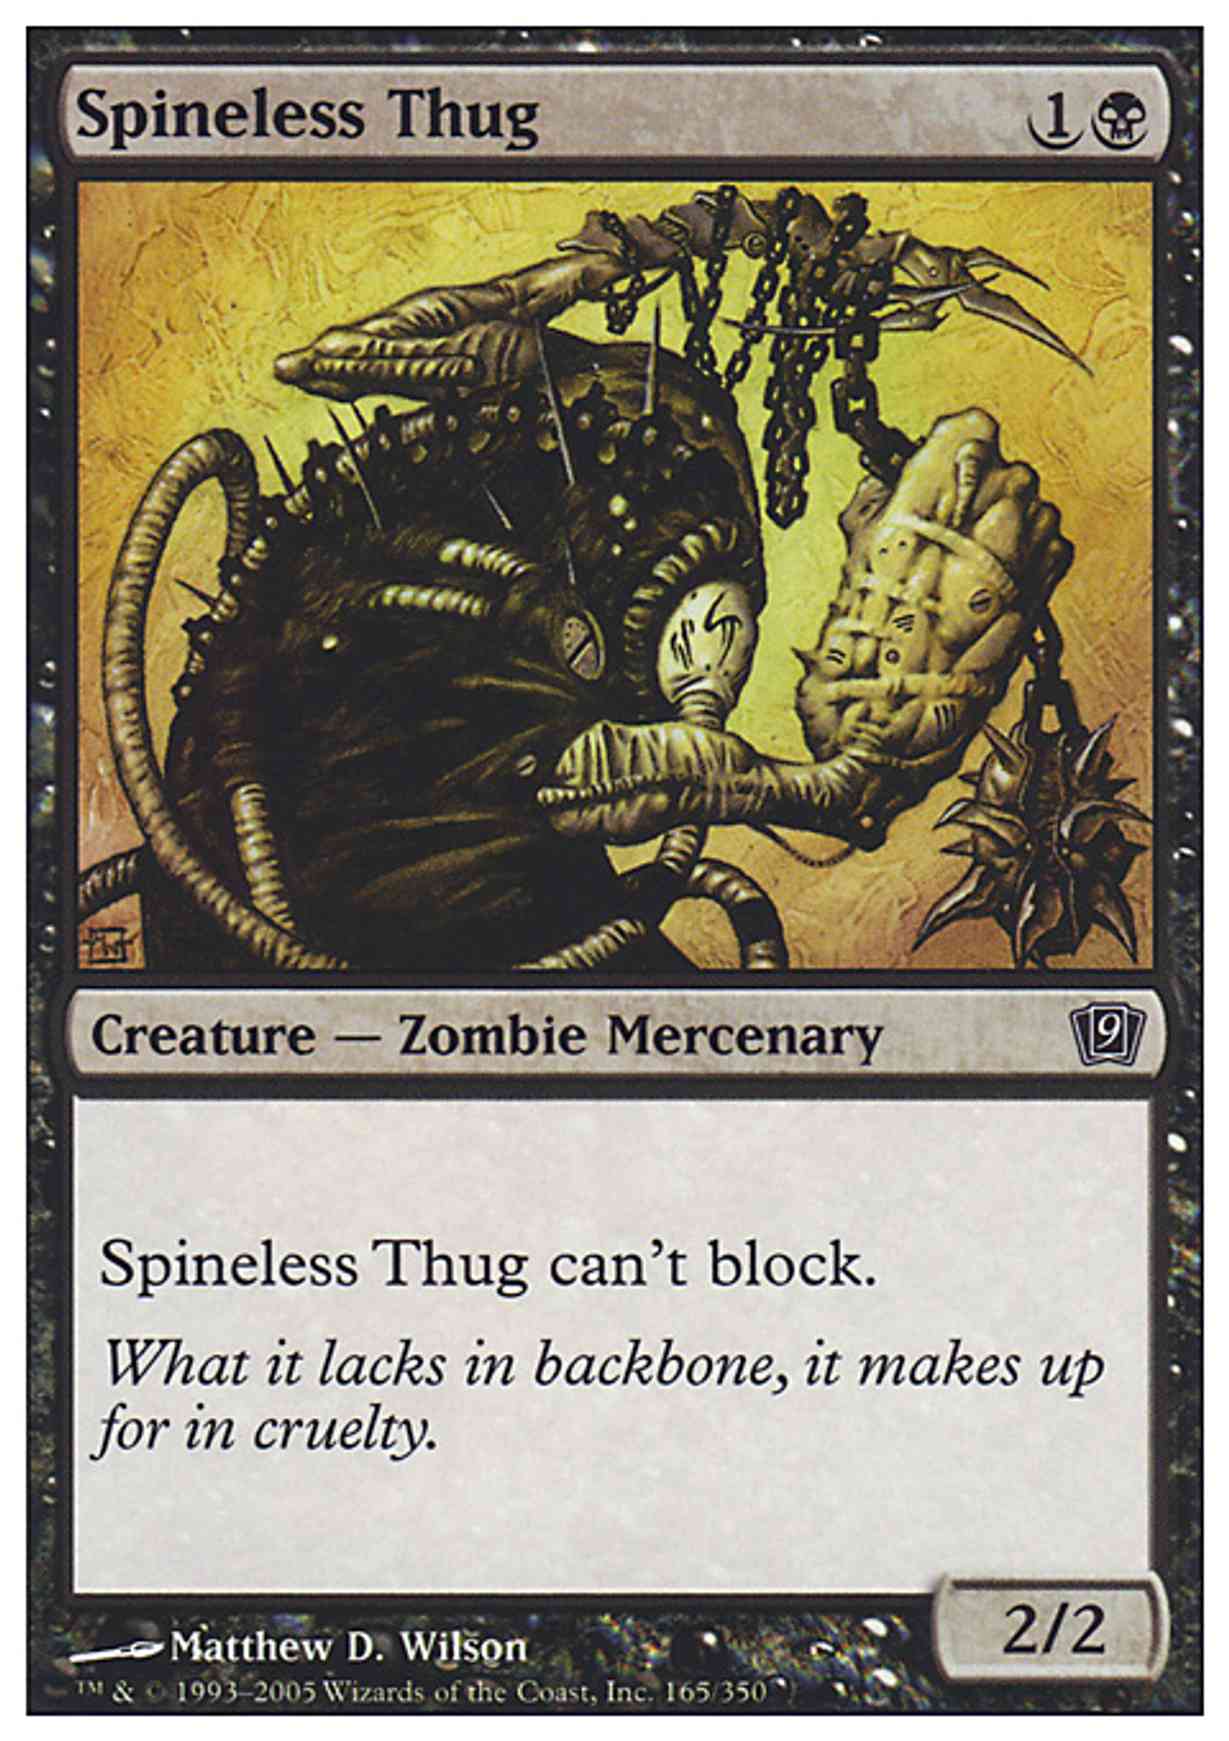 Spineless Thug magic card front